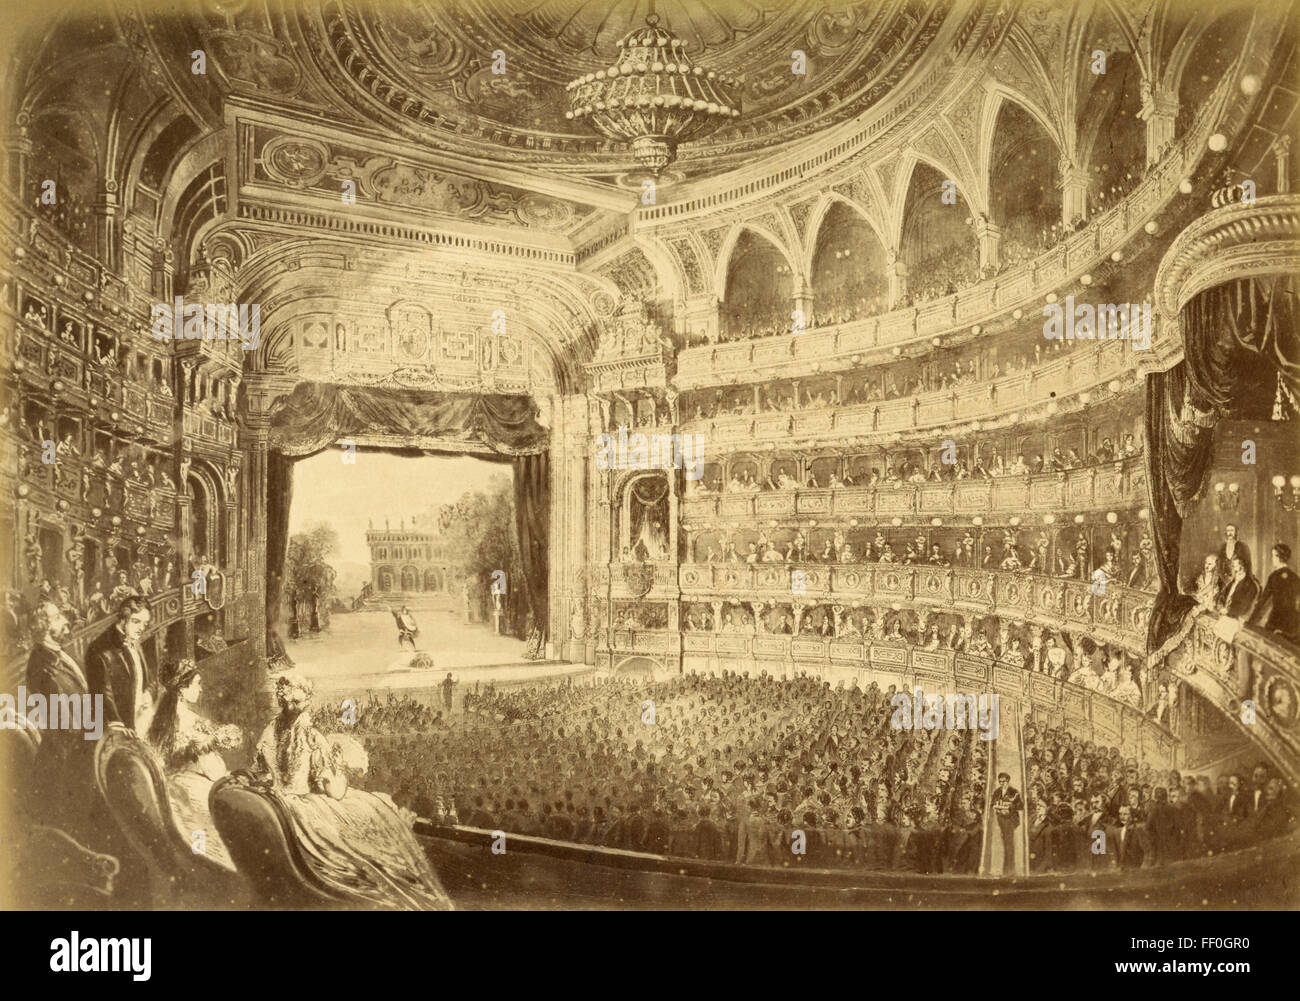 Inside the Opera, Vienna, Austria, painted Stock Photo